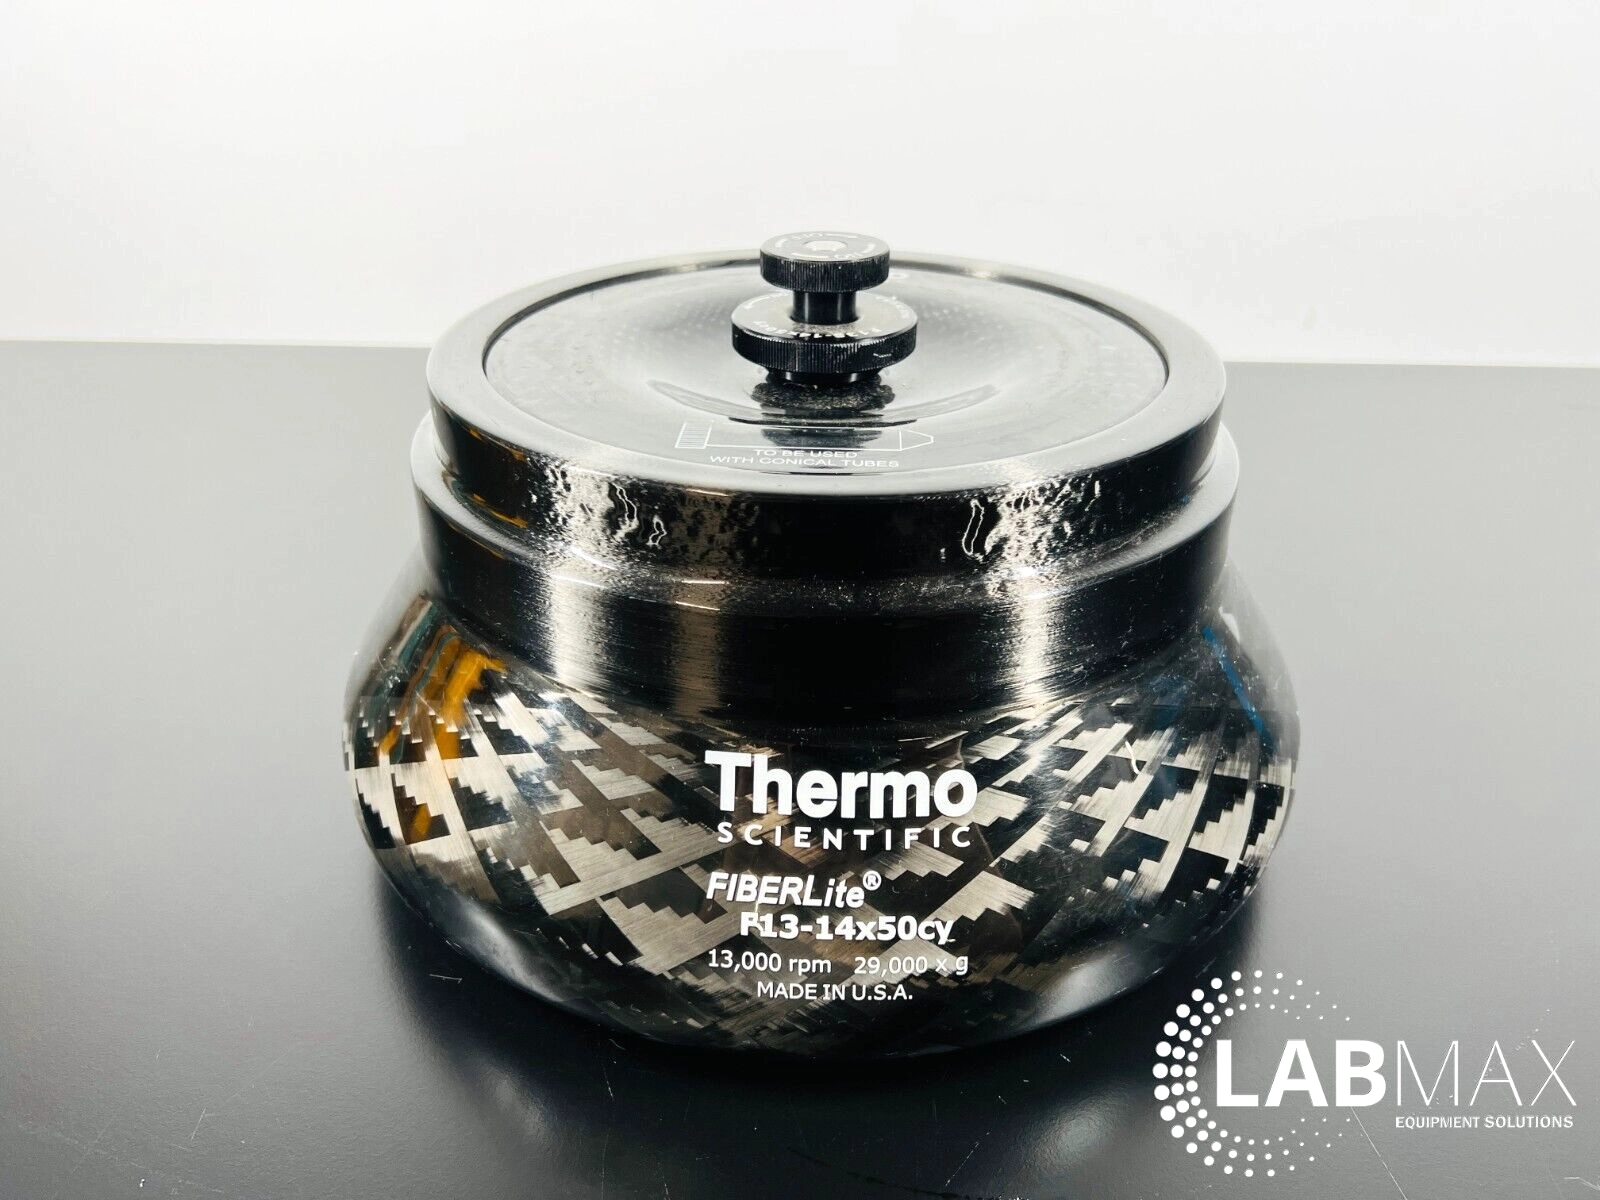 Thermo FIBERLite F13-14x50cy 13,000 rpm 29,000g Fi